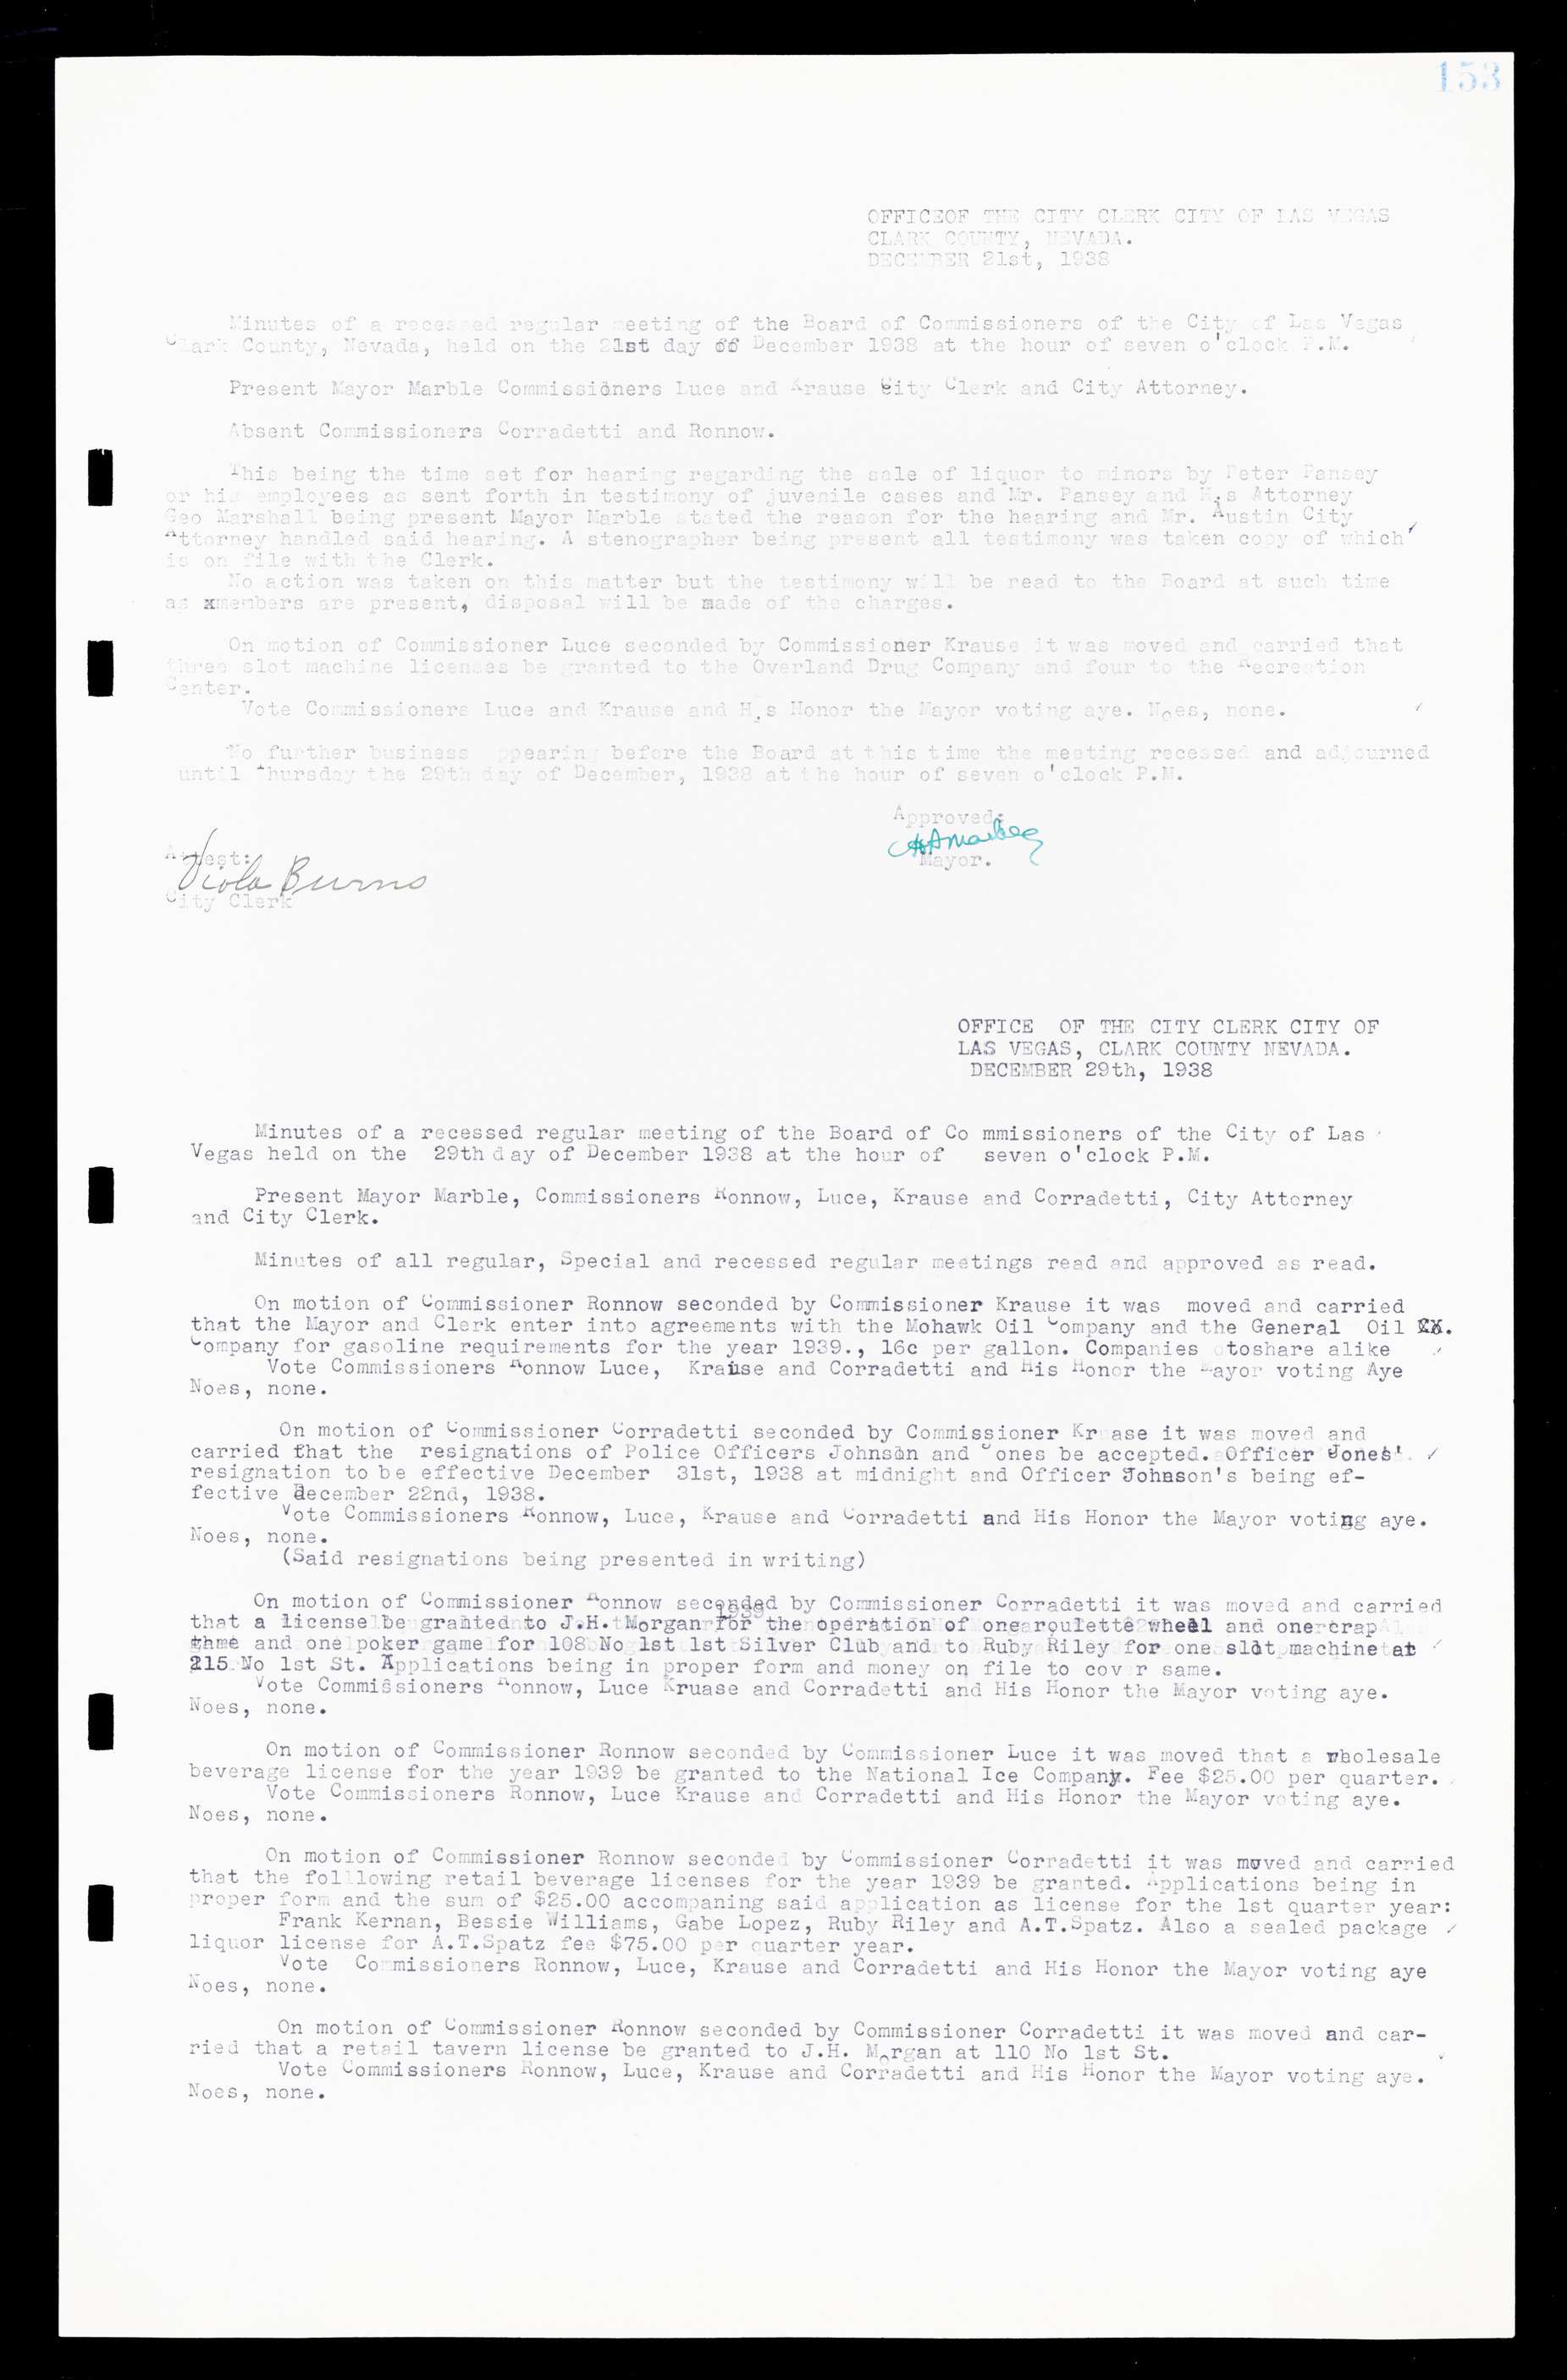 Las Vegas City Commission Minutes, February 17, 1937 to August 4, 1942, lvc000004-166